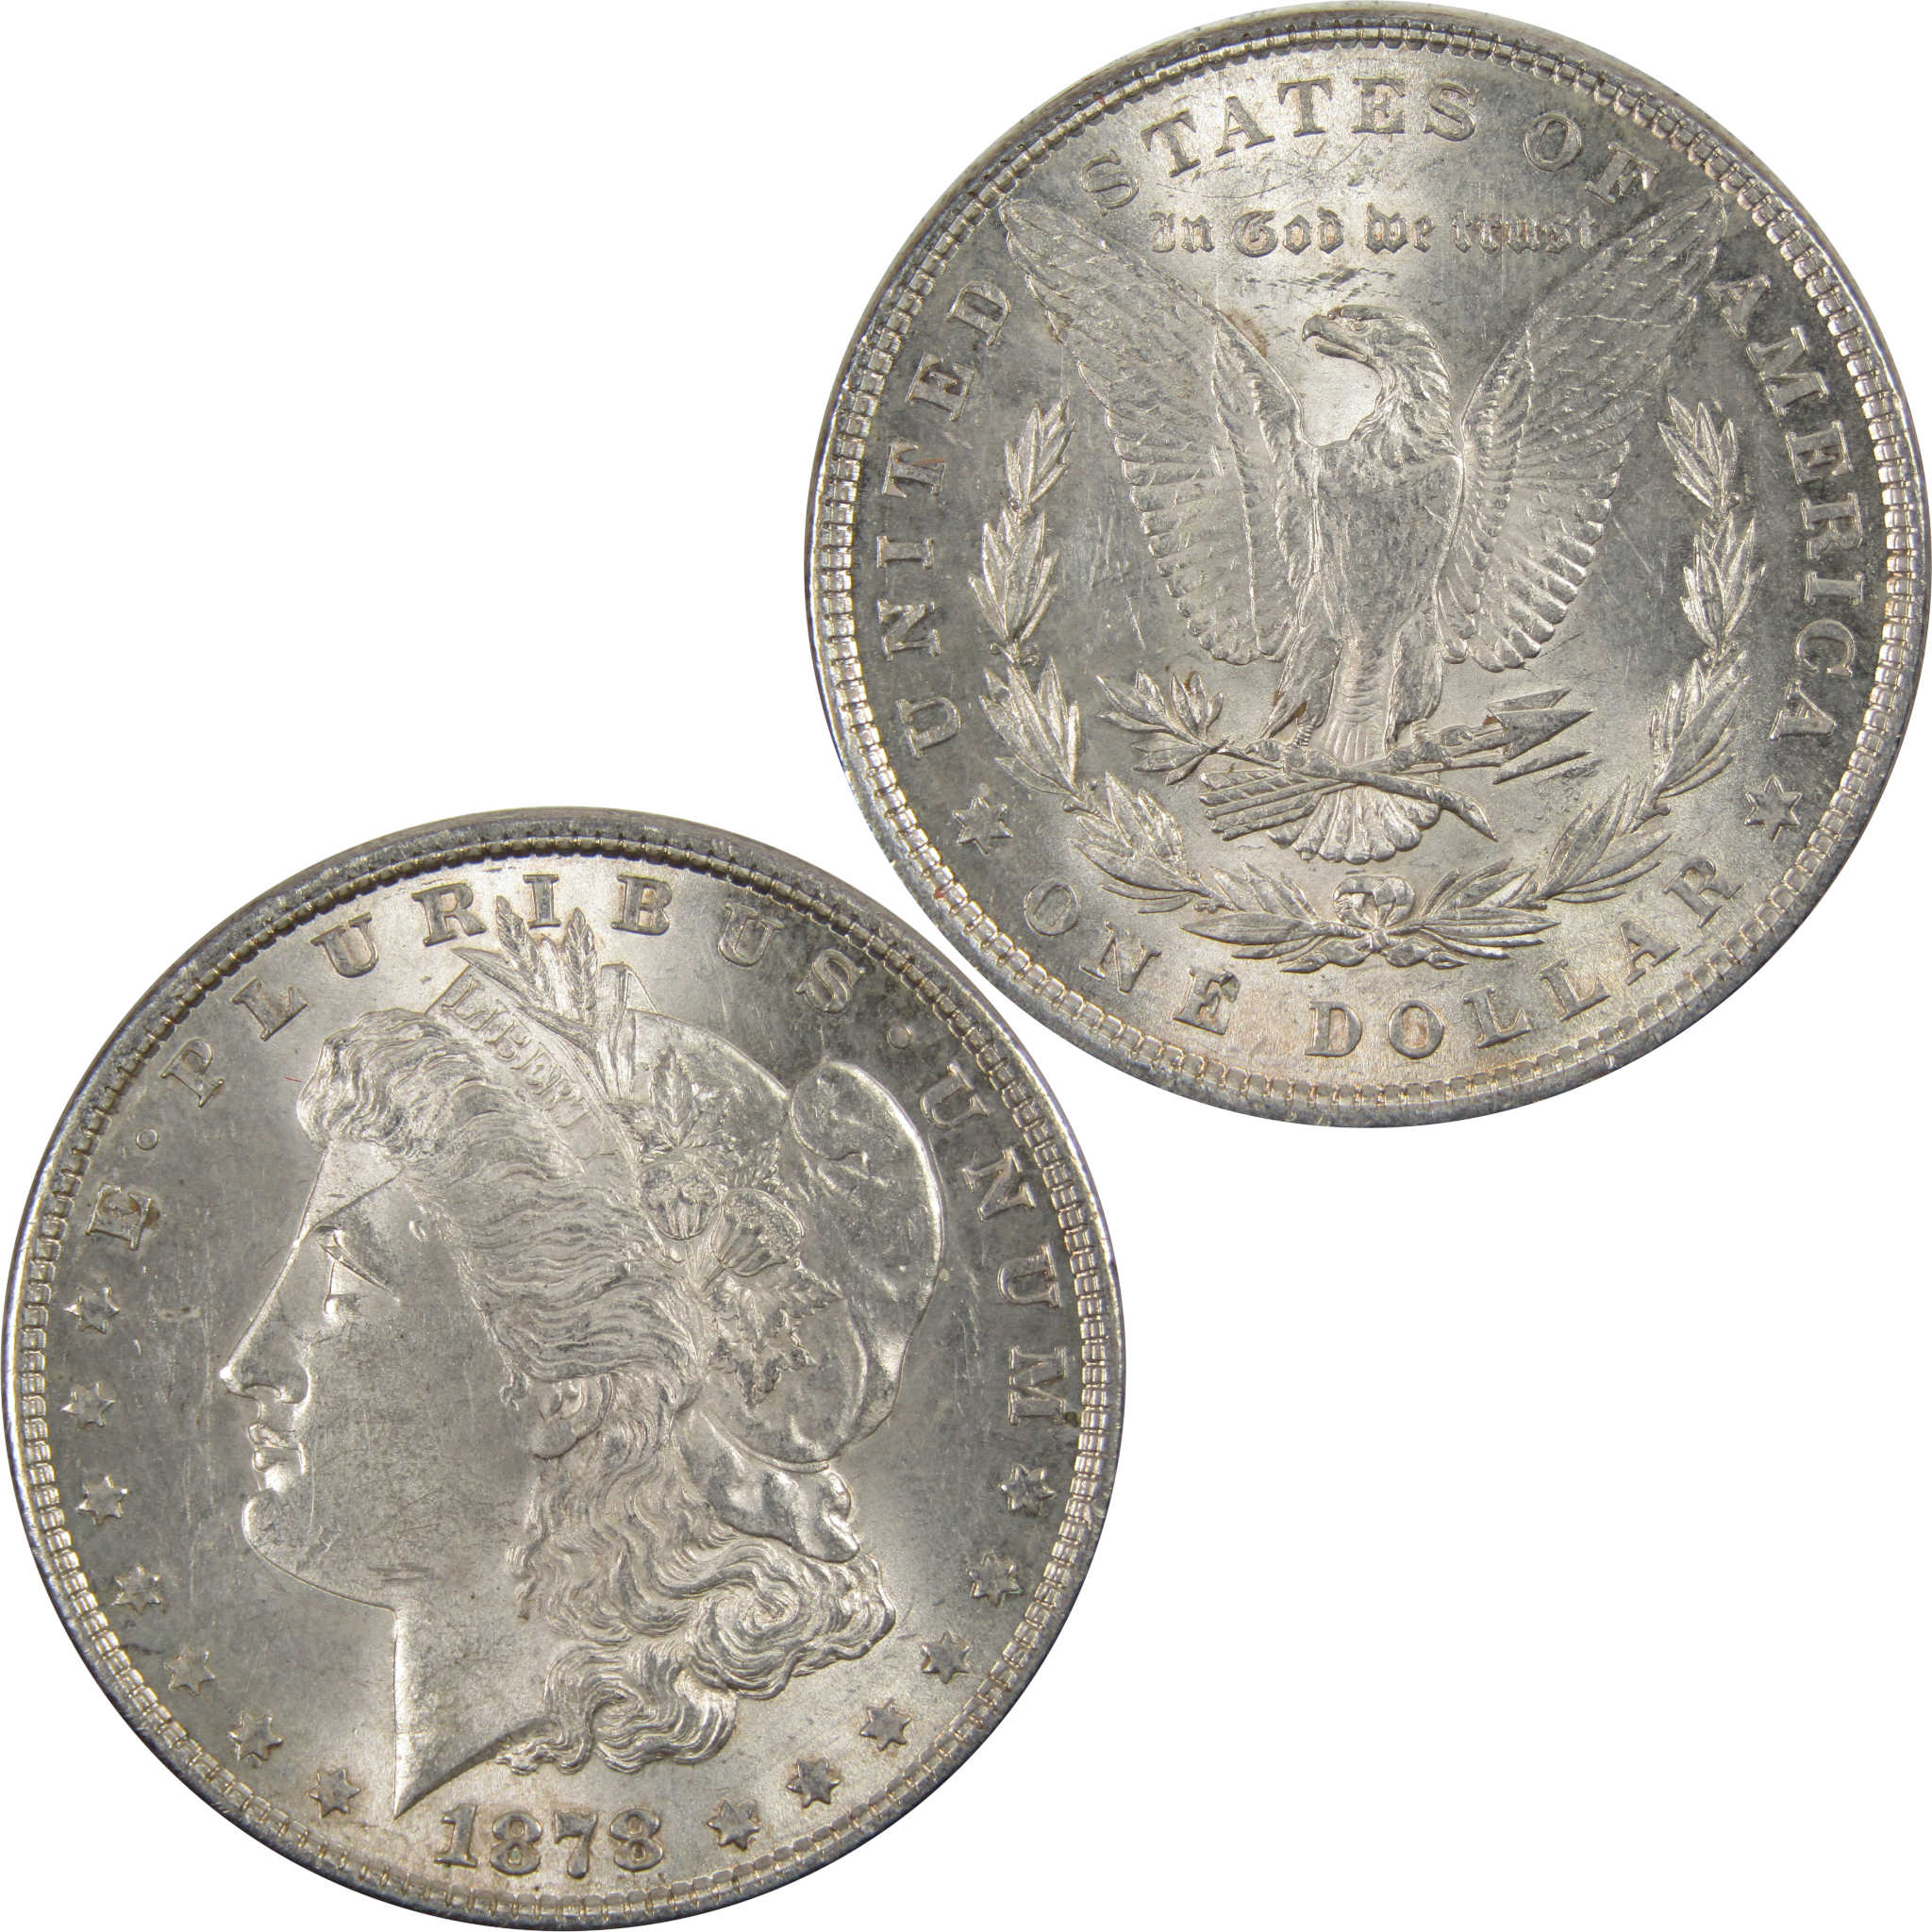 1878 7TF Rev 78 Morgan Dollar Borderline Unc 90% Silver SKU:I7854 - Morgan coin - Morgan silver dollar - Morgan silver dollar for sale - Profile Coins &amp; Collectibles